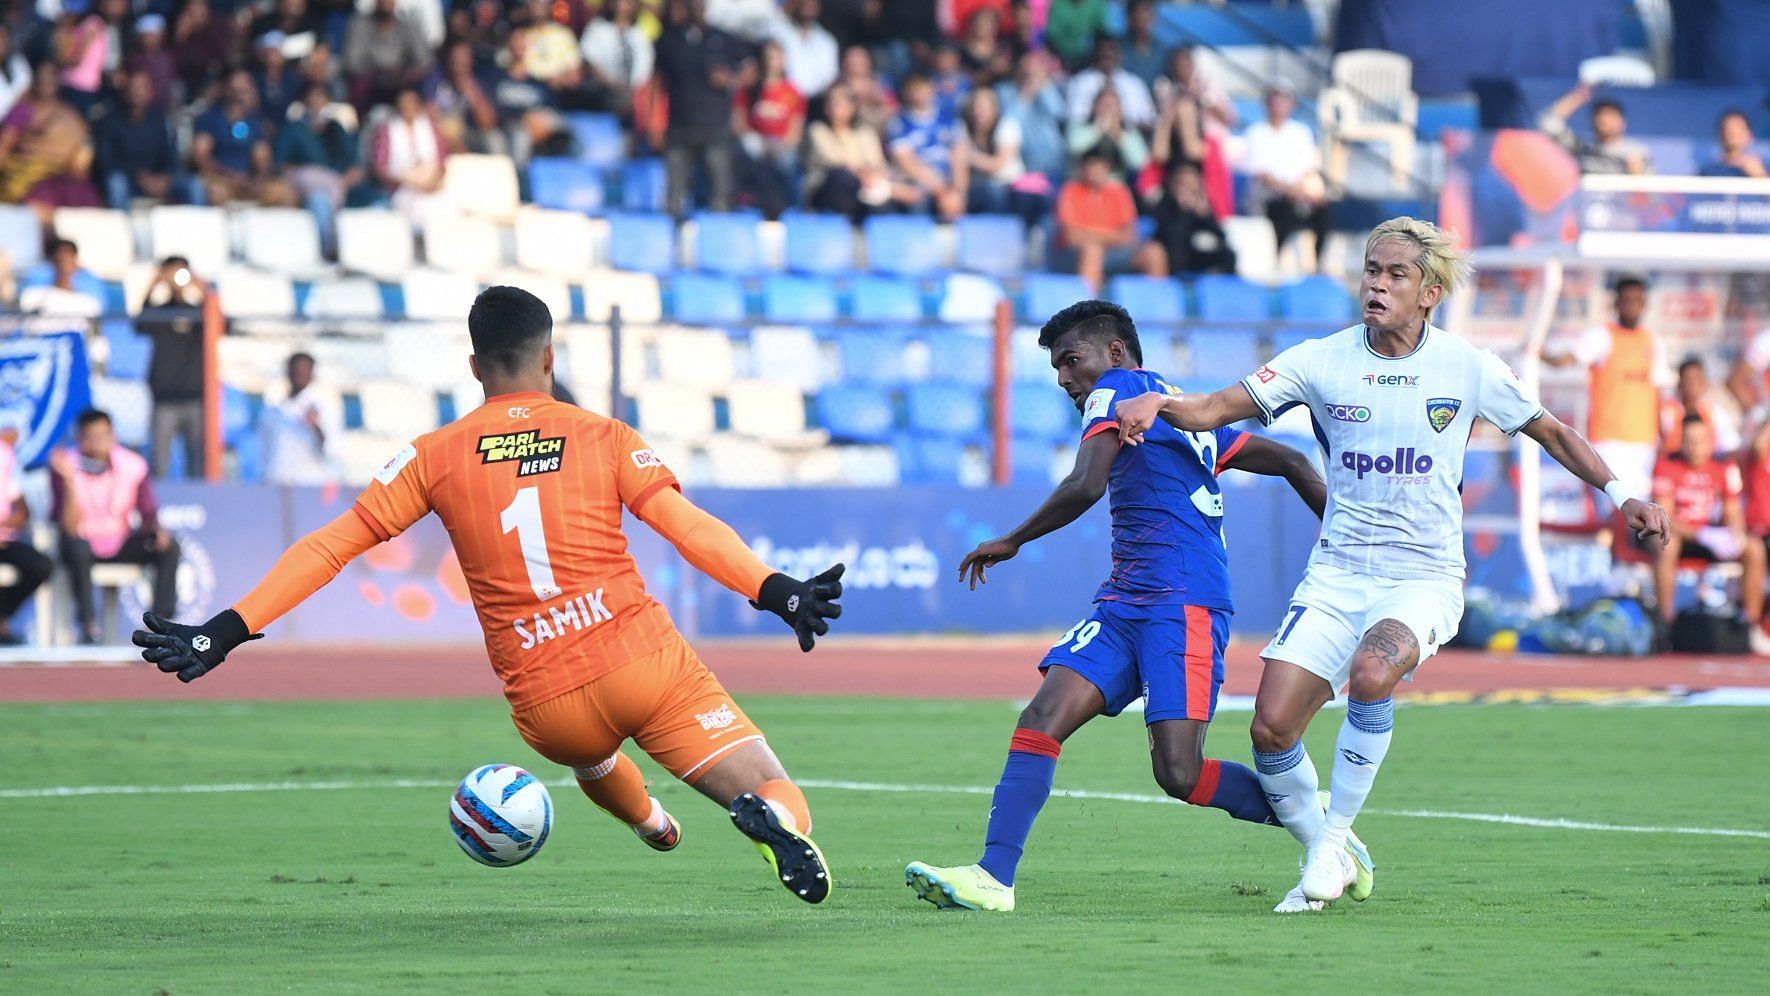 Sivasakthi Narayan scoring his first goal of the night for Bengaluru FC.